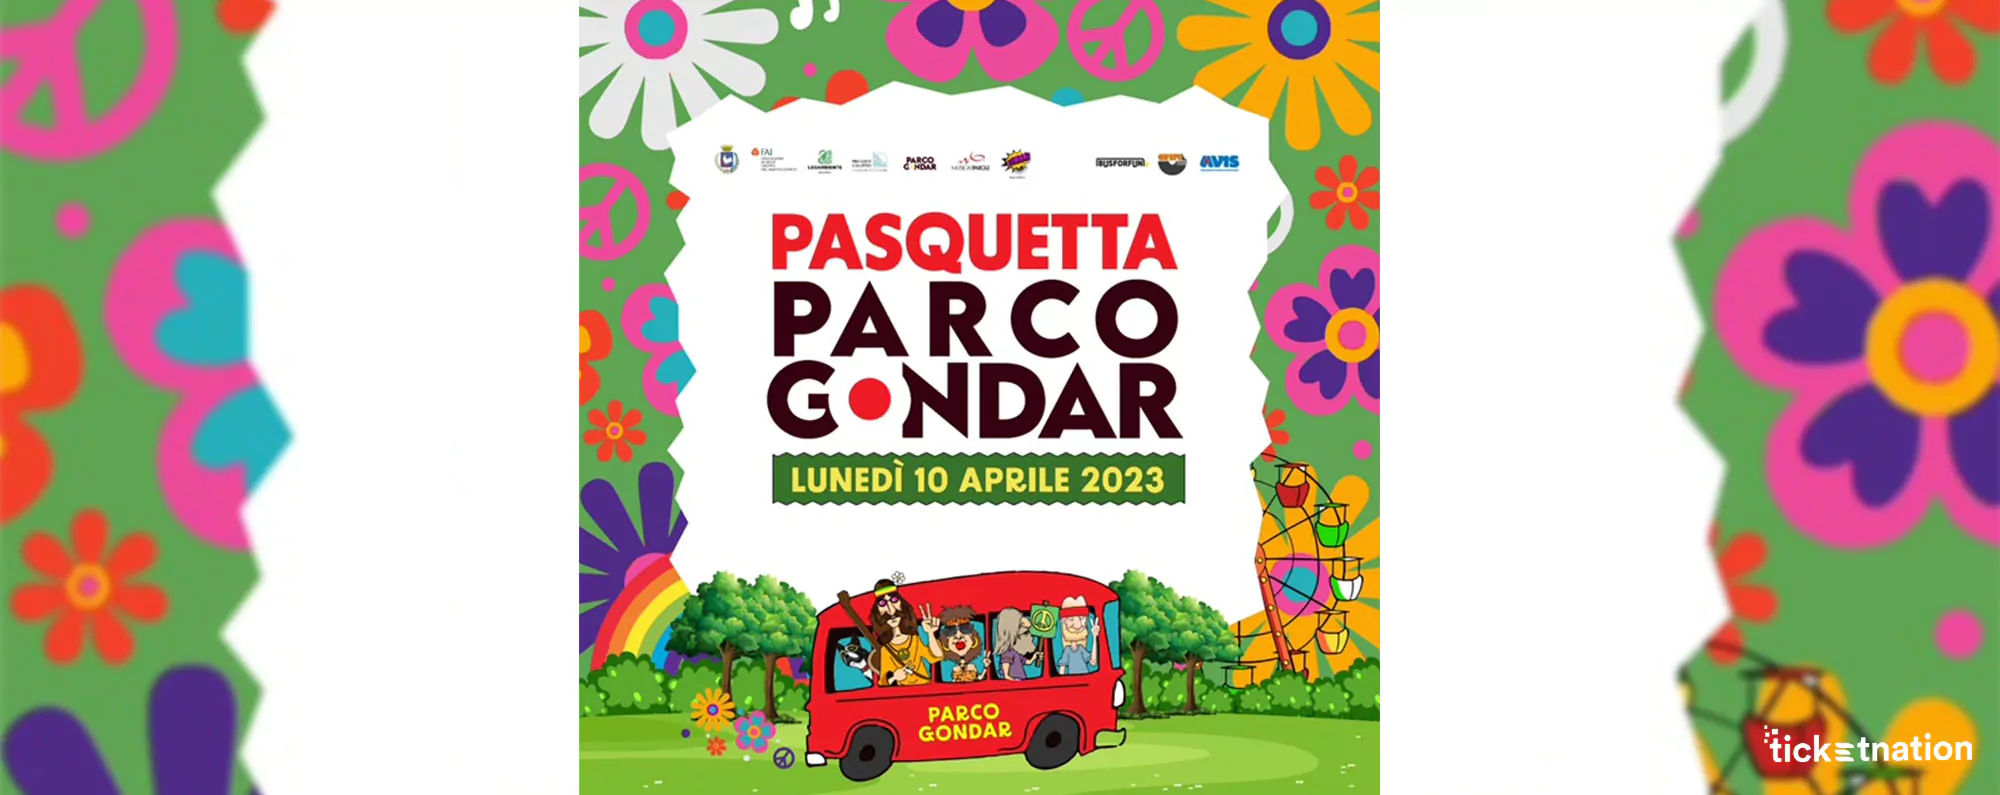 PASQUETTA-PARCO-GONDAR-GALLIPOLI-10-APRILE-2023